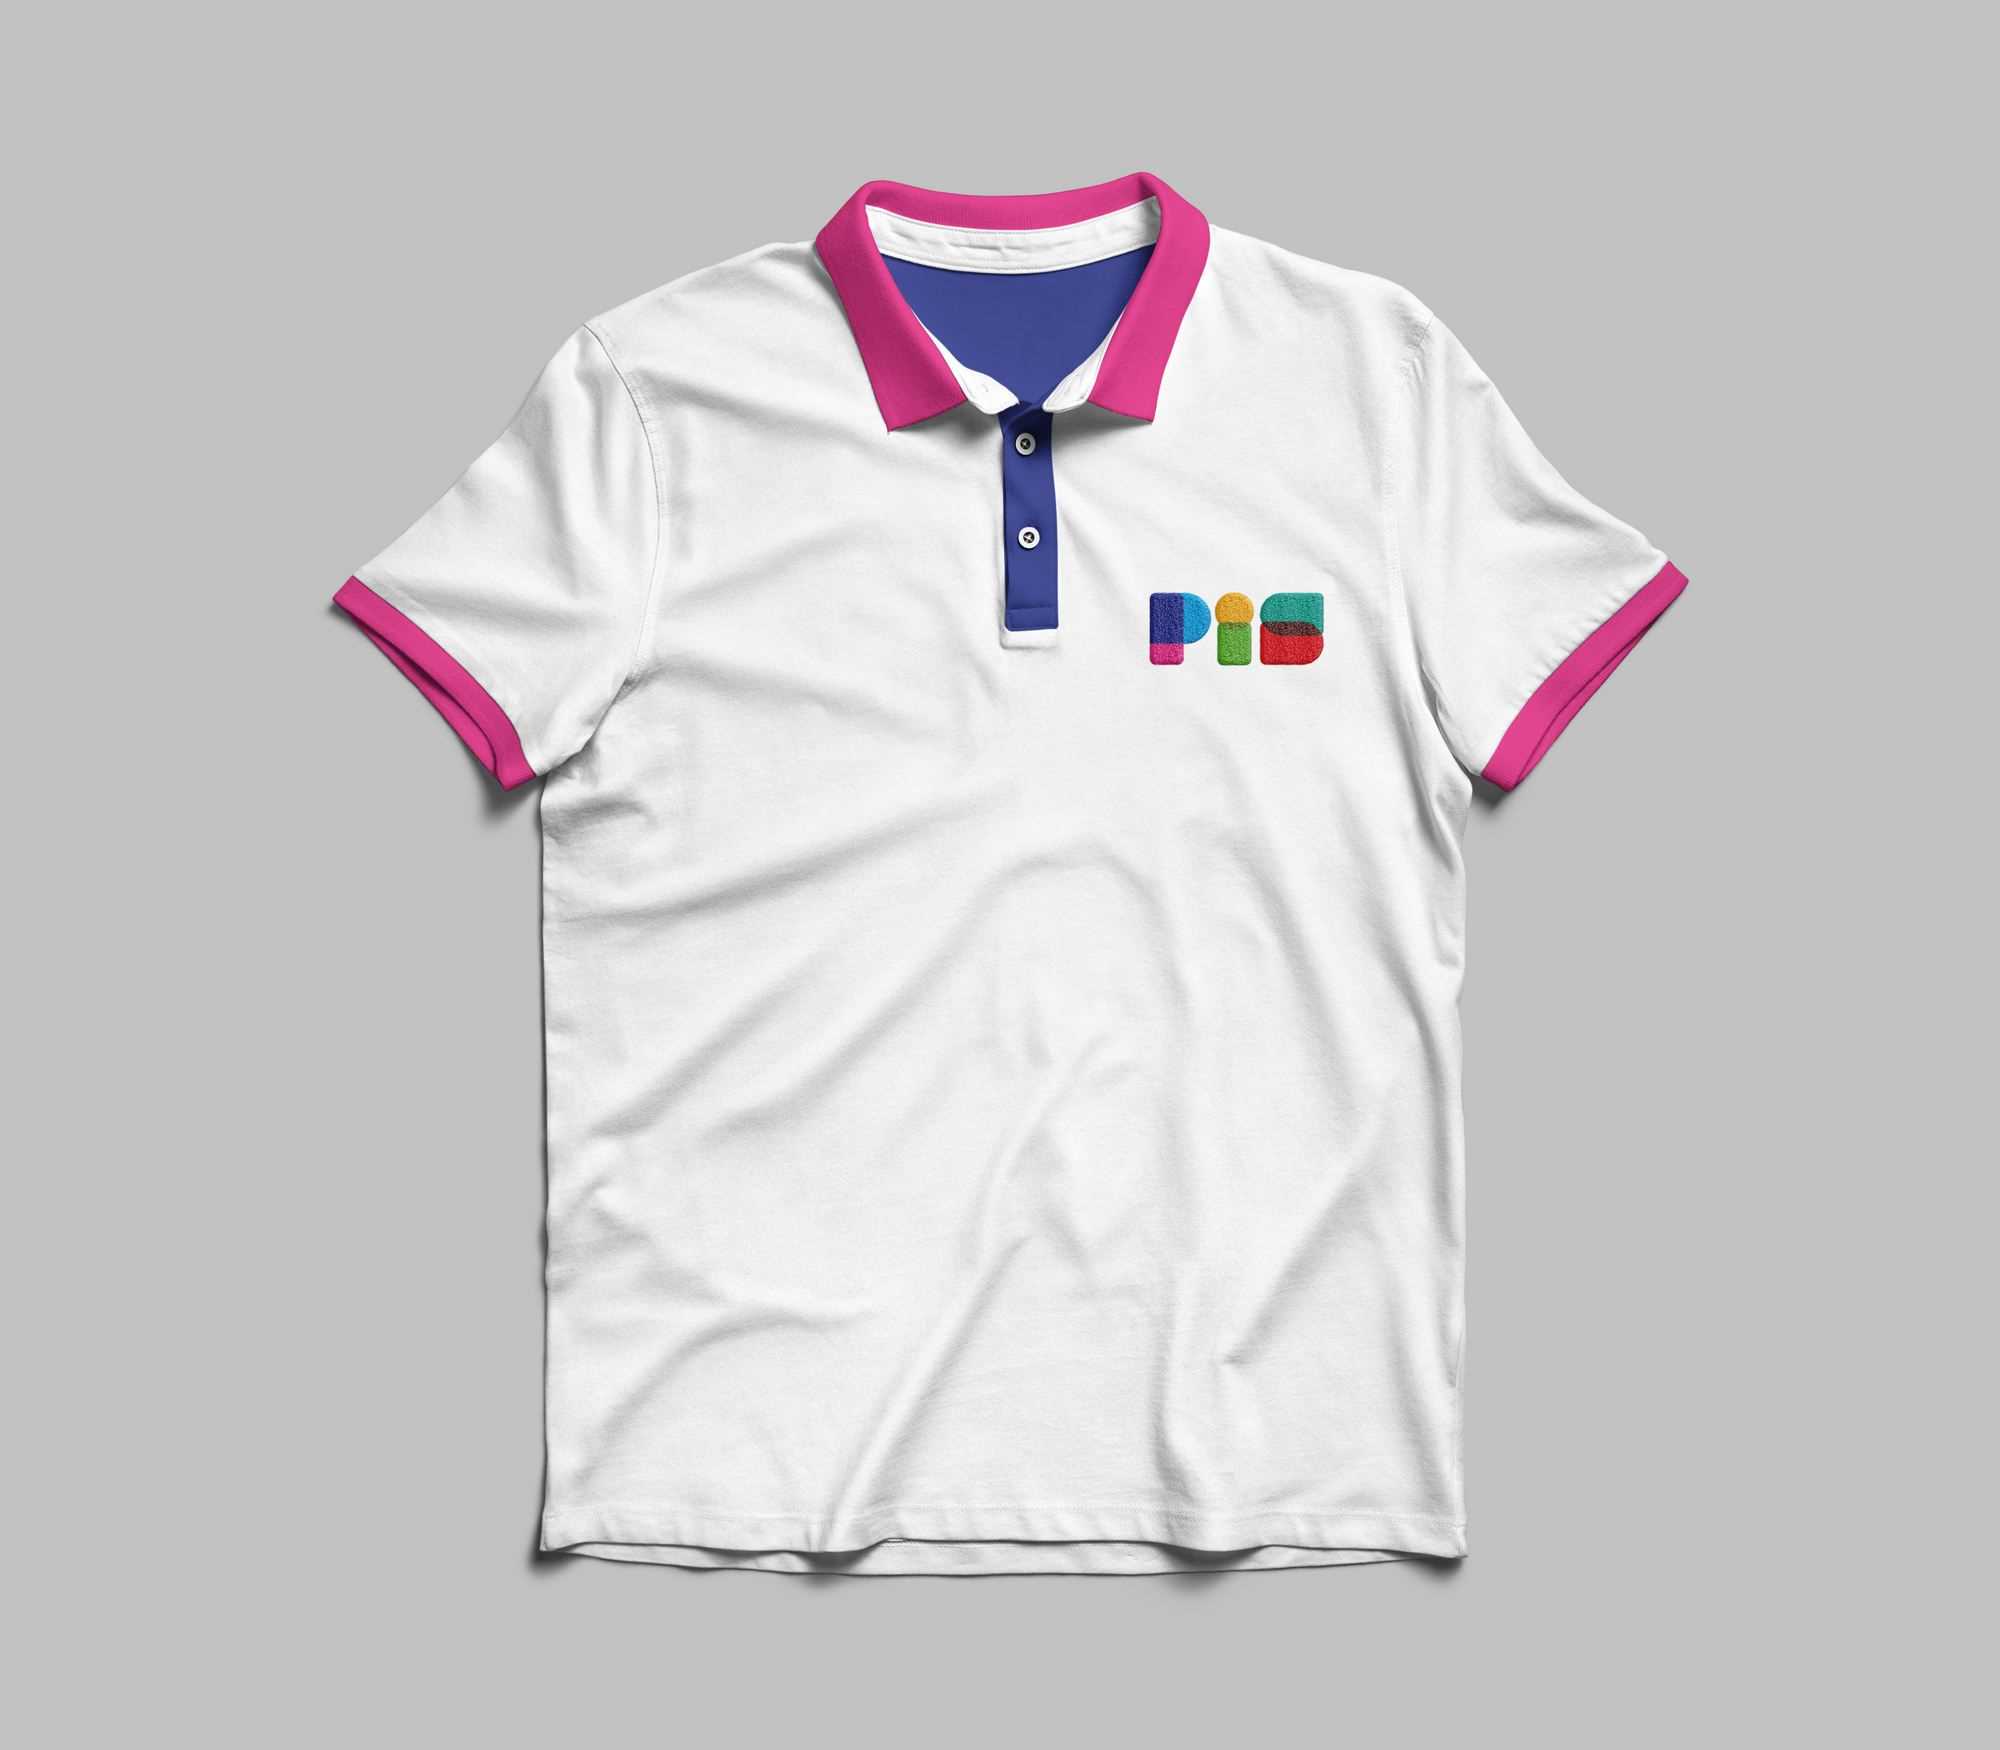 PIS Tshirt Design